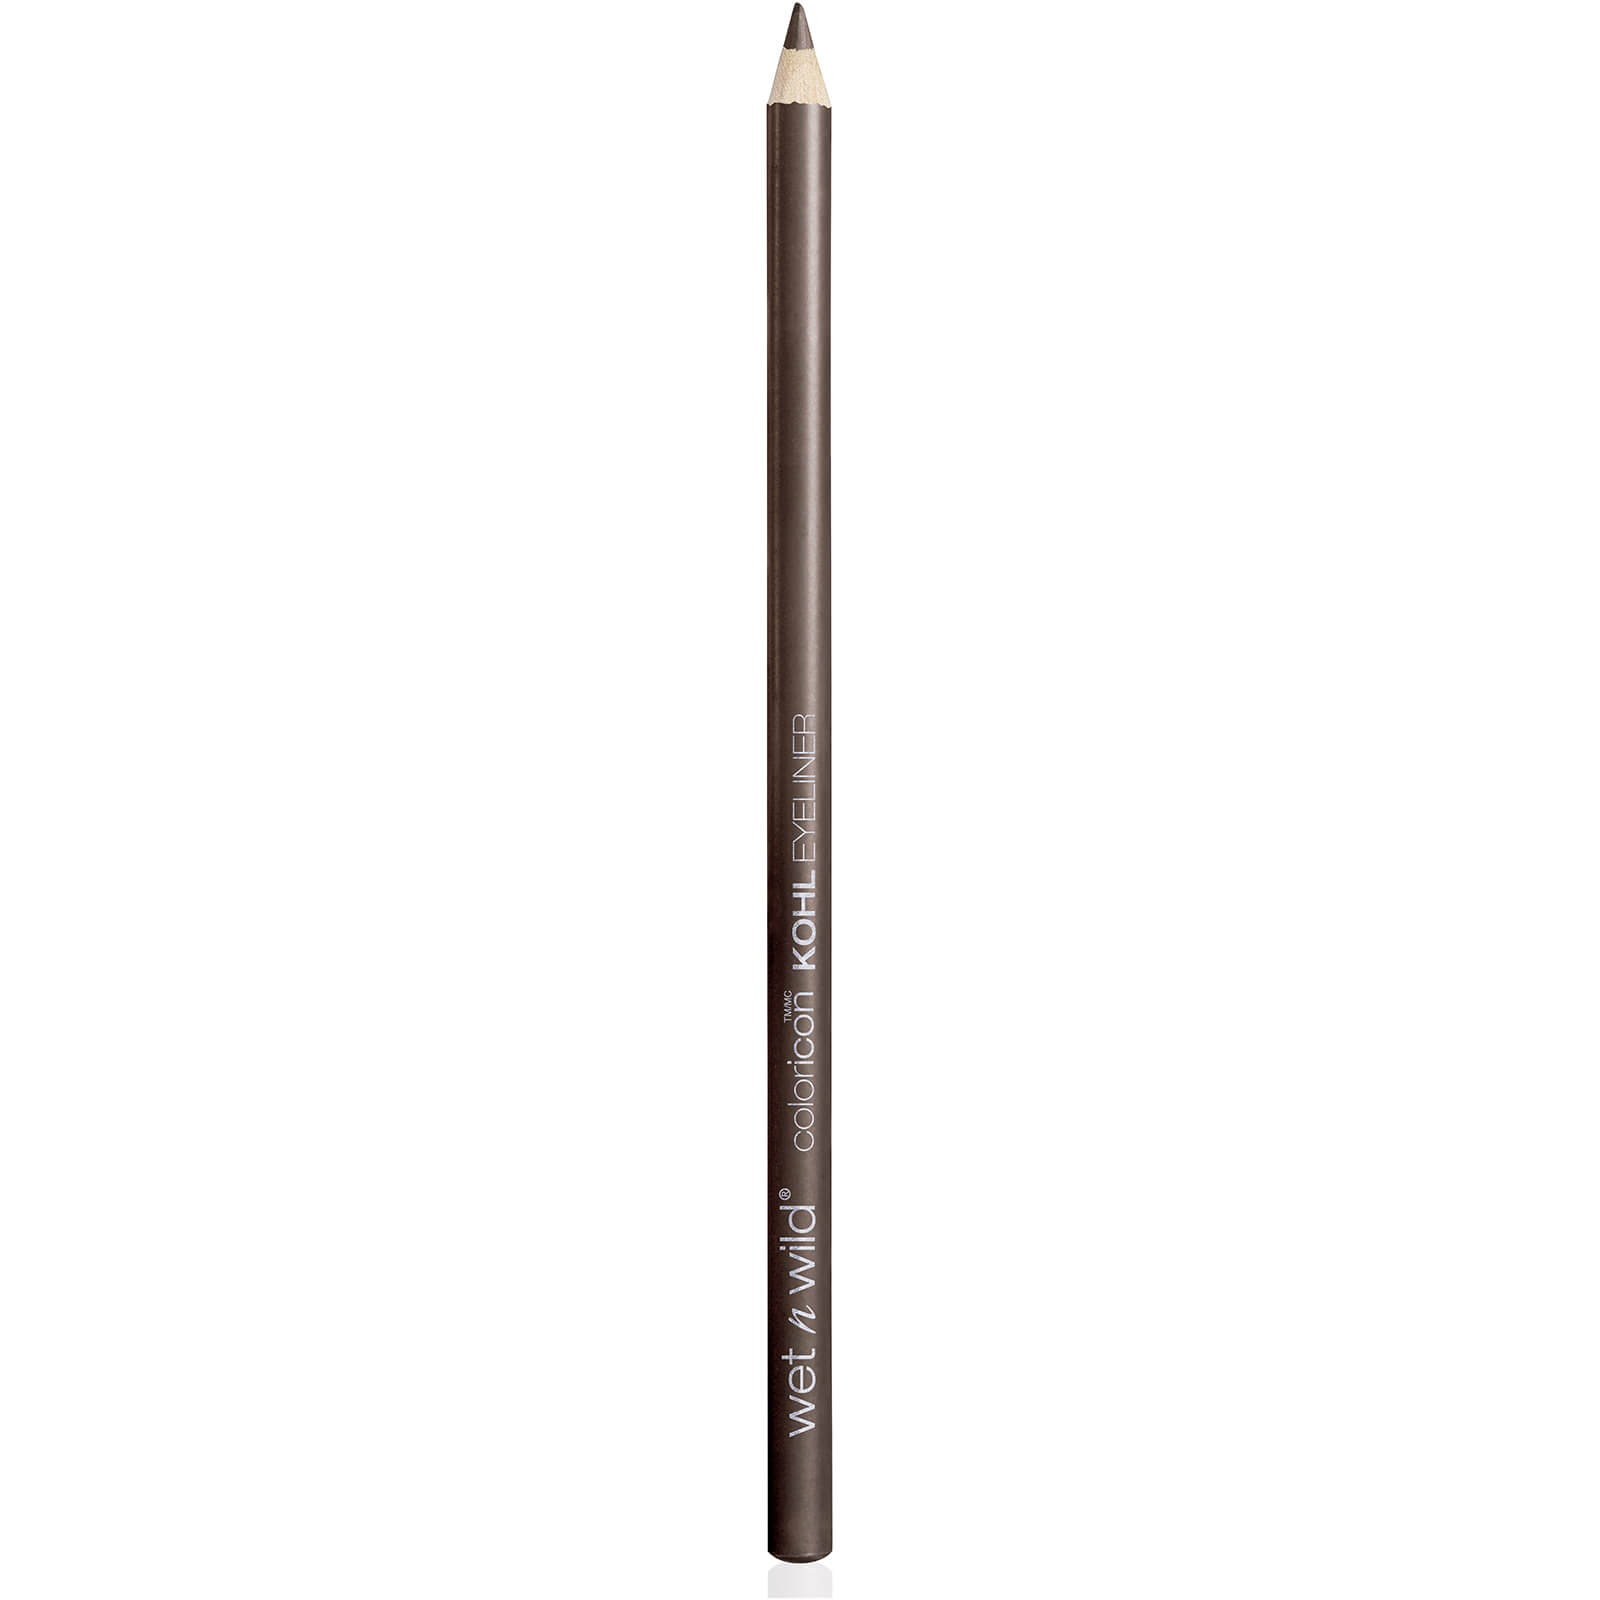 Photos - Eye / Eyebrow Pencil Wet n Wild coloricon Kohl Eyeliner Pencil 1.4g  - Simma Br (Various Shades)